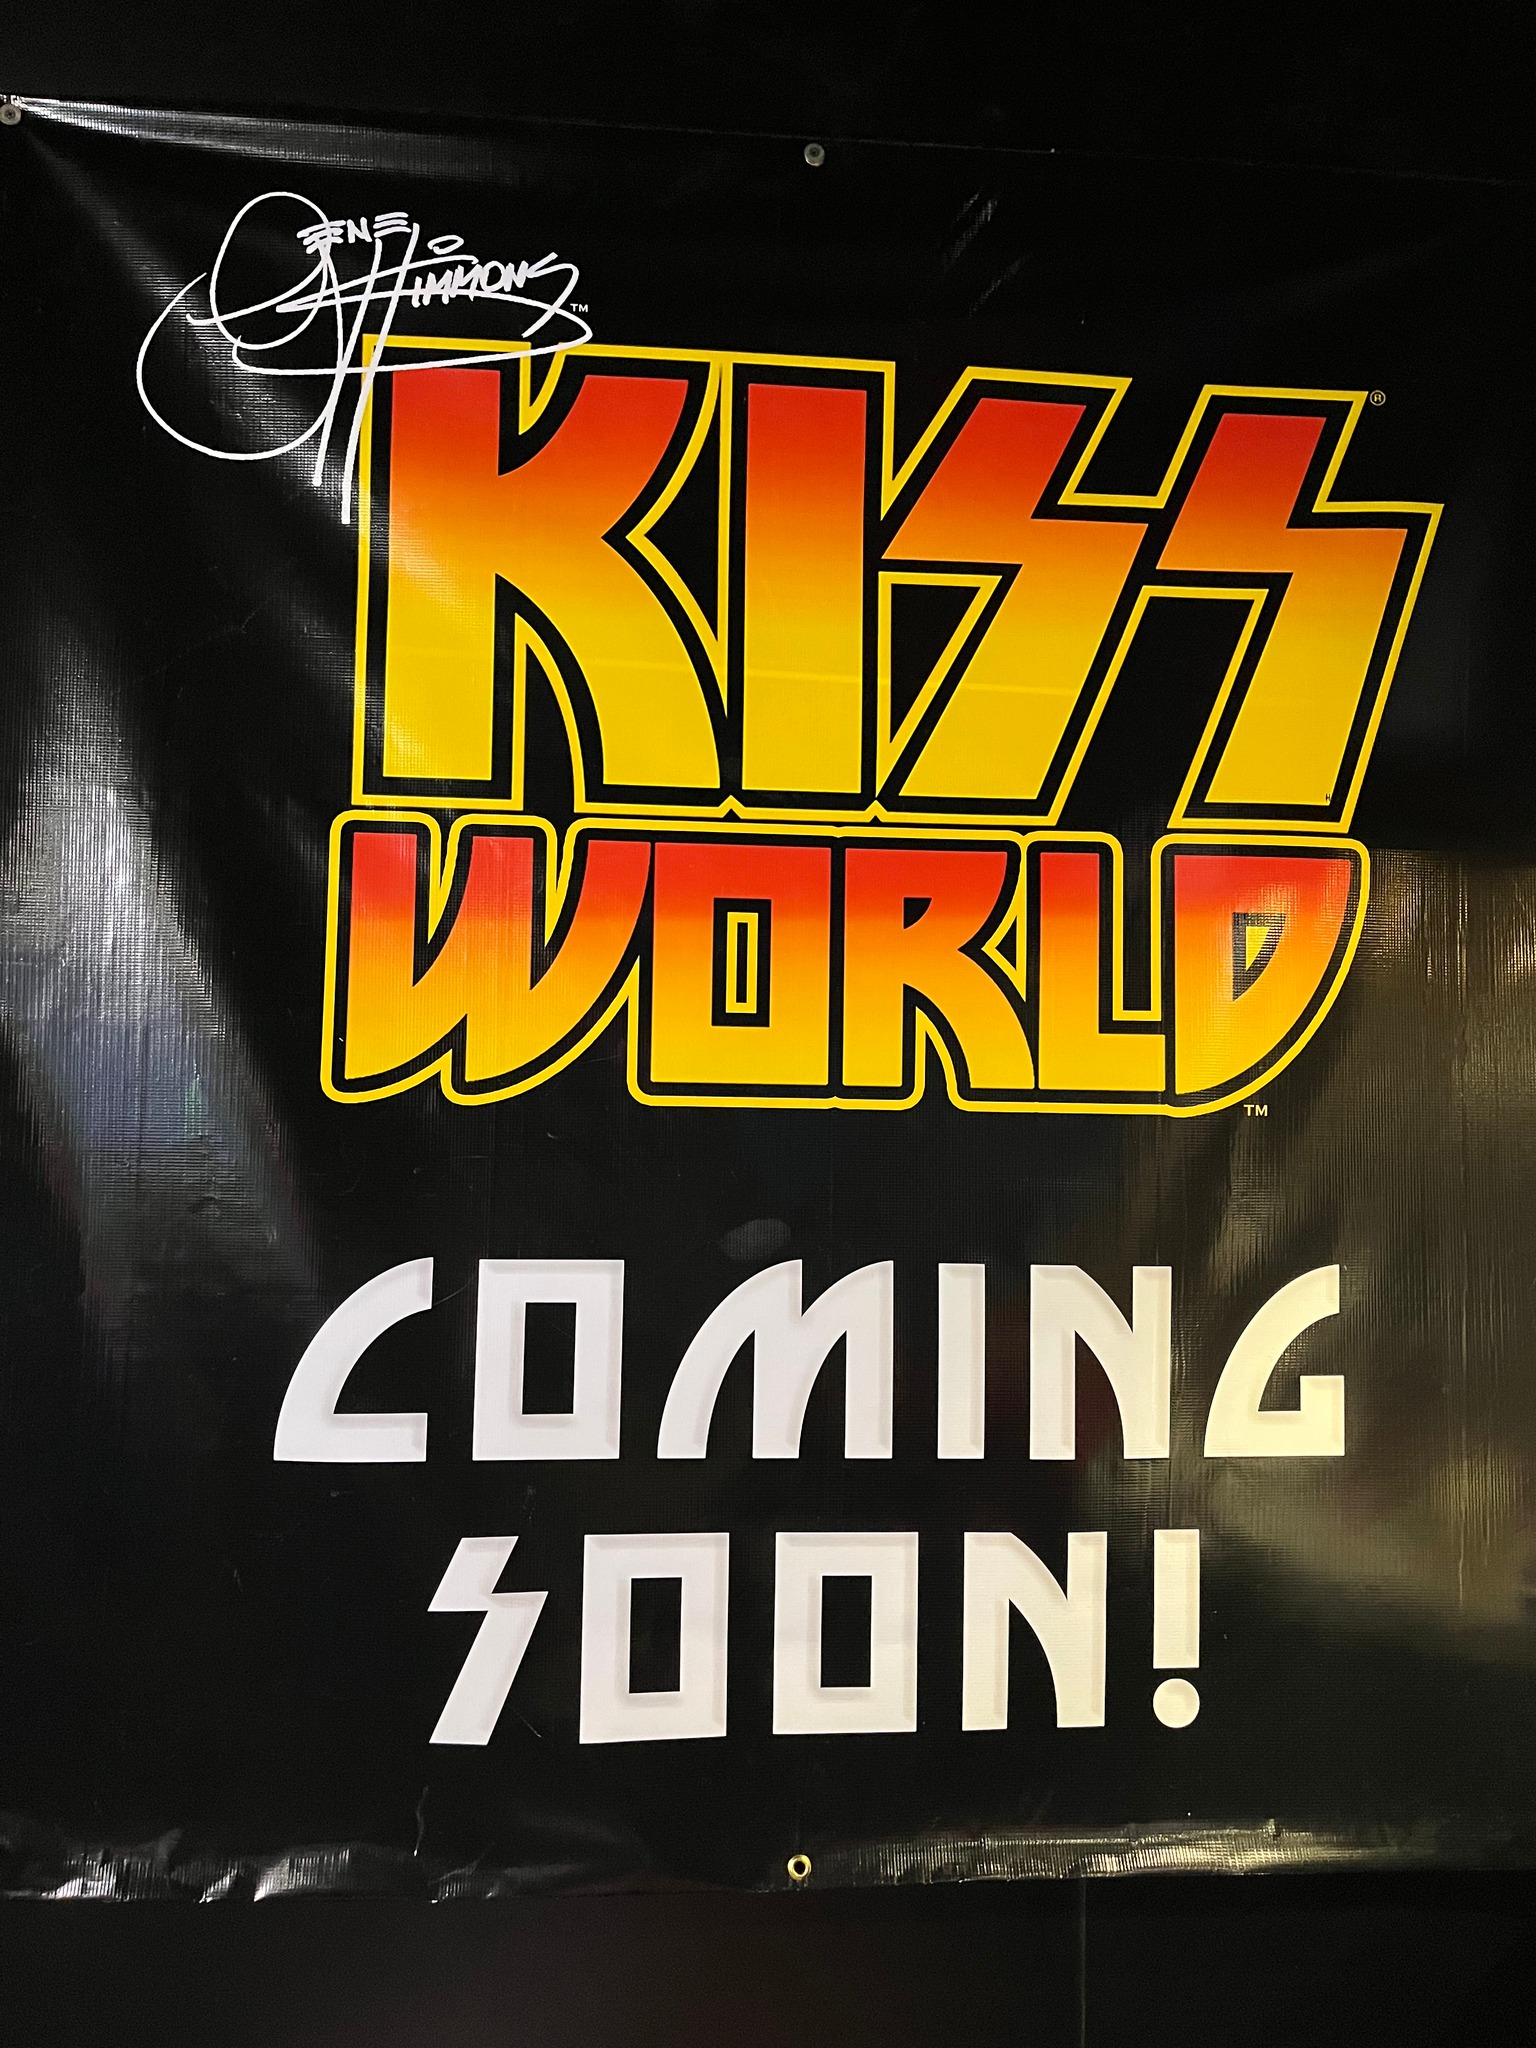 Gene Simmons’ KISS World Soft Opening!